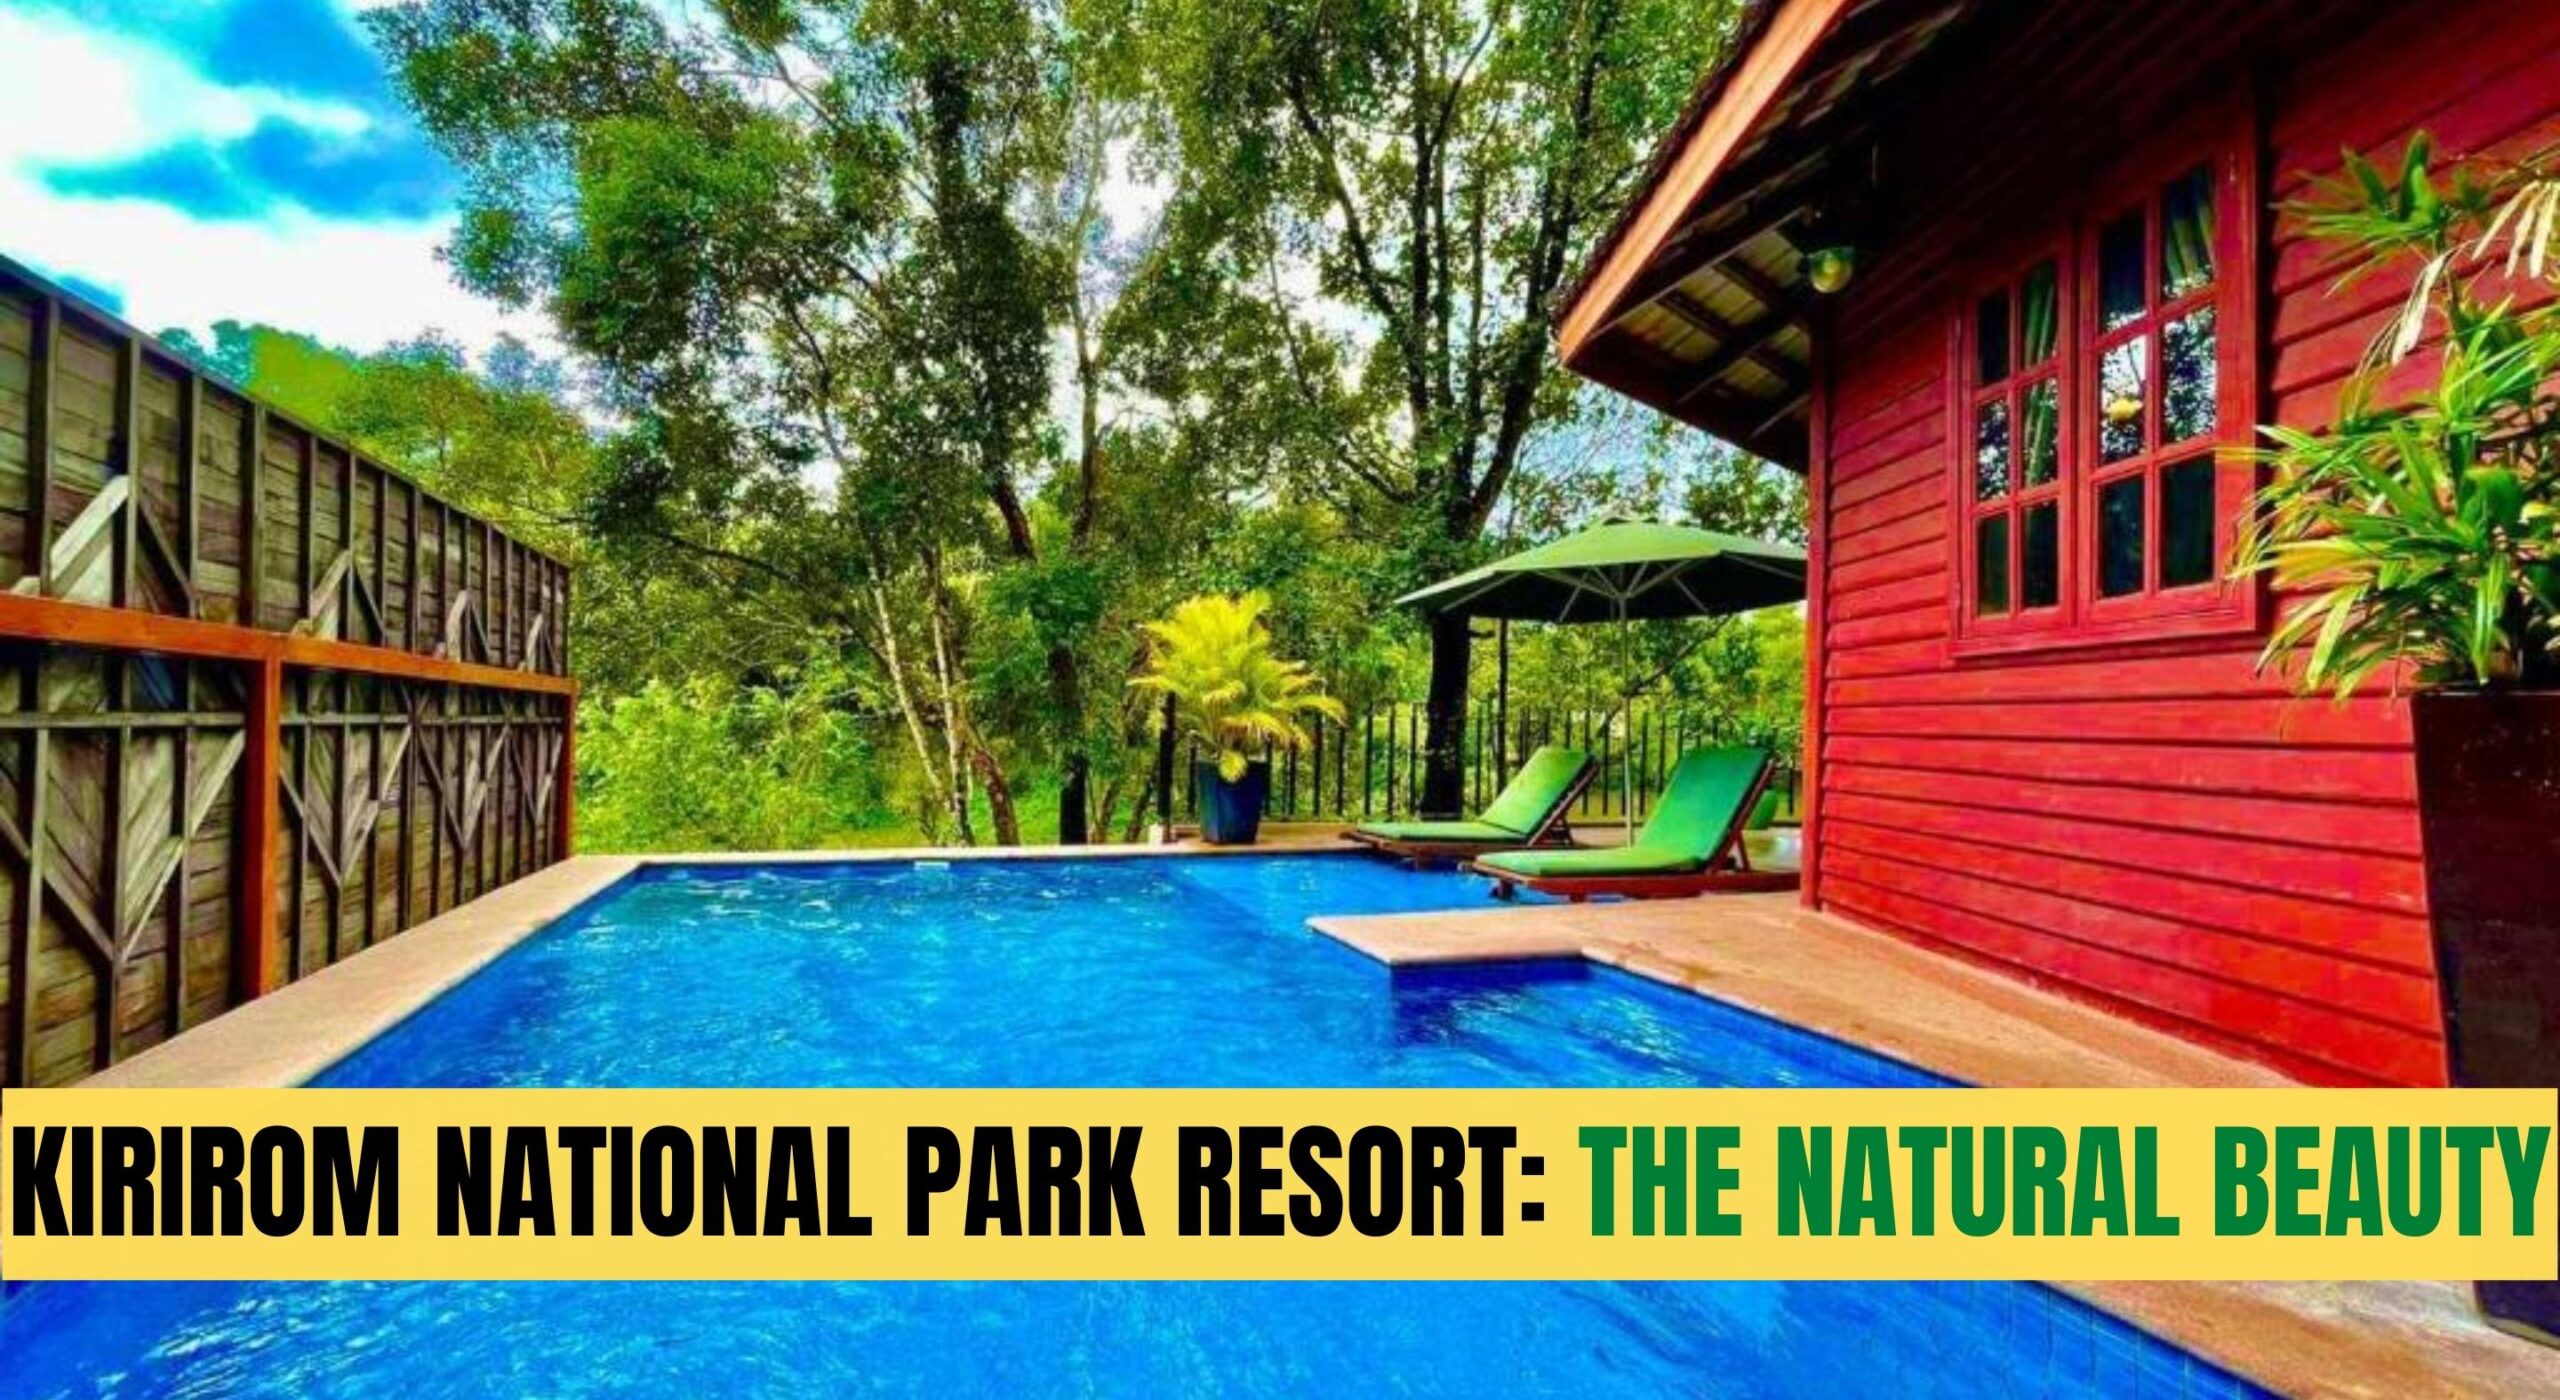 Kirirom National Park Resort: The Natural Beauty